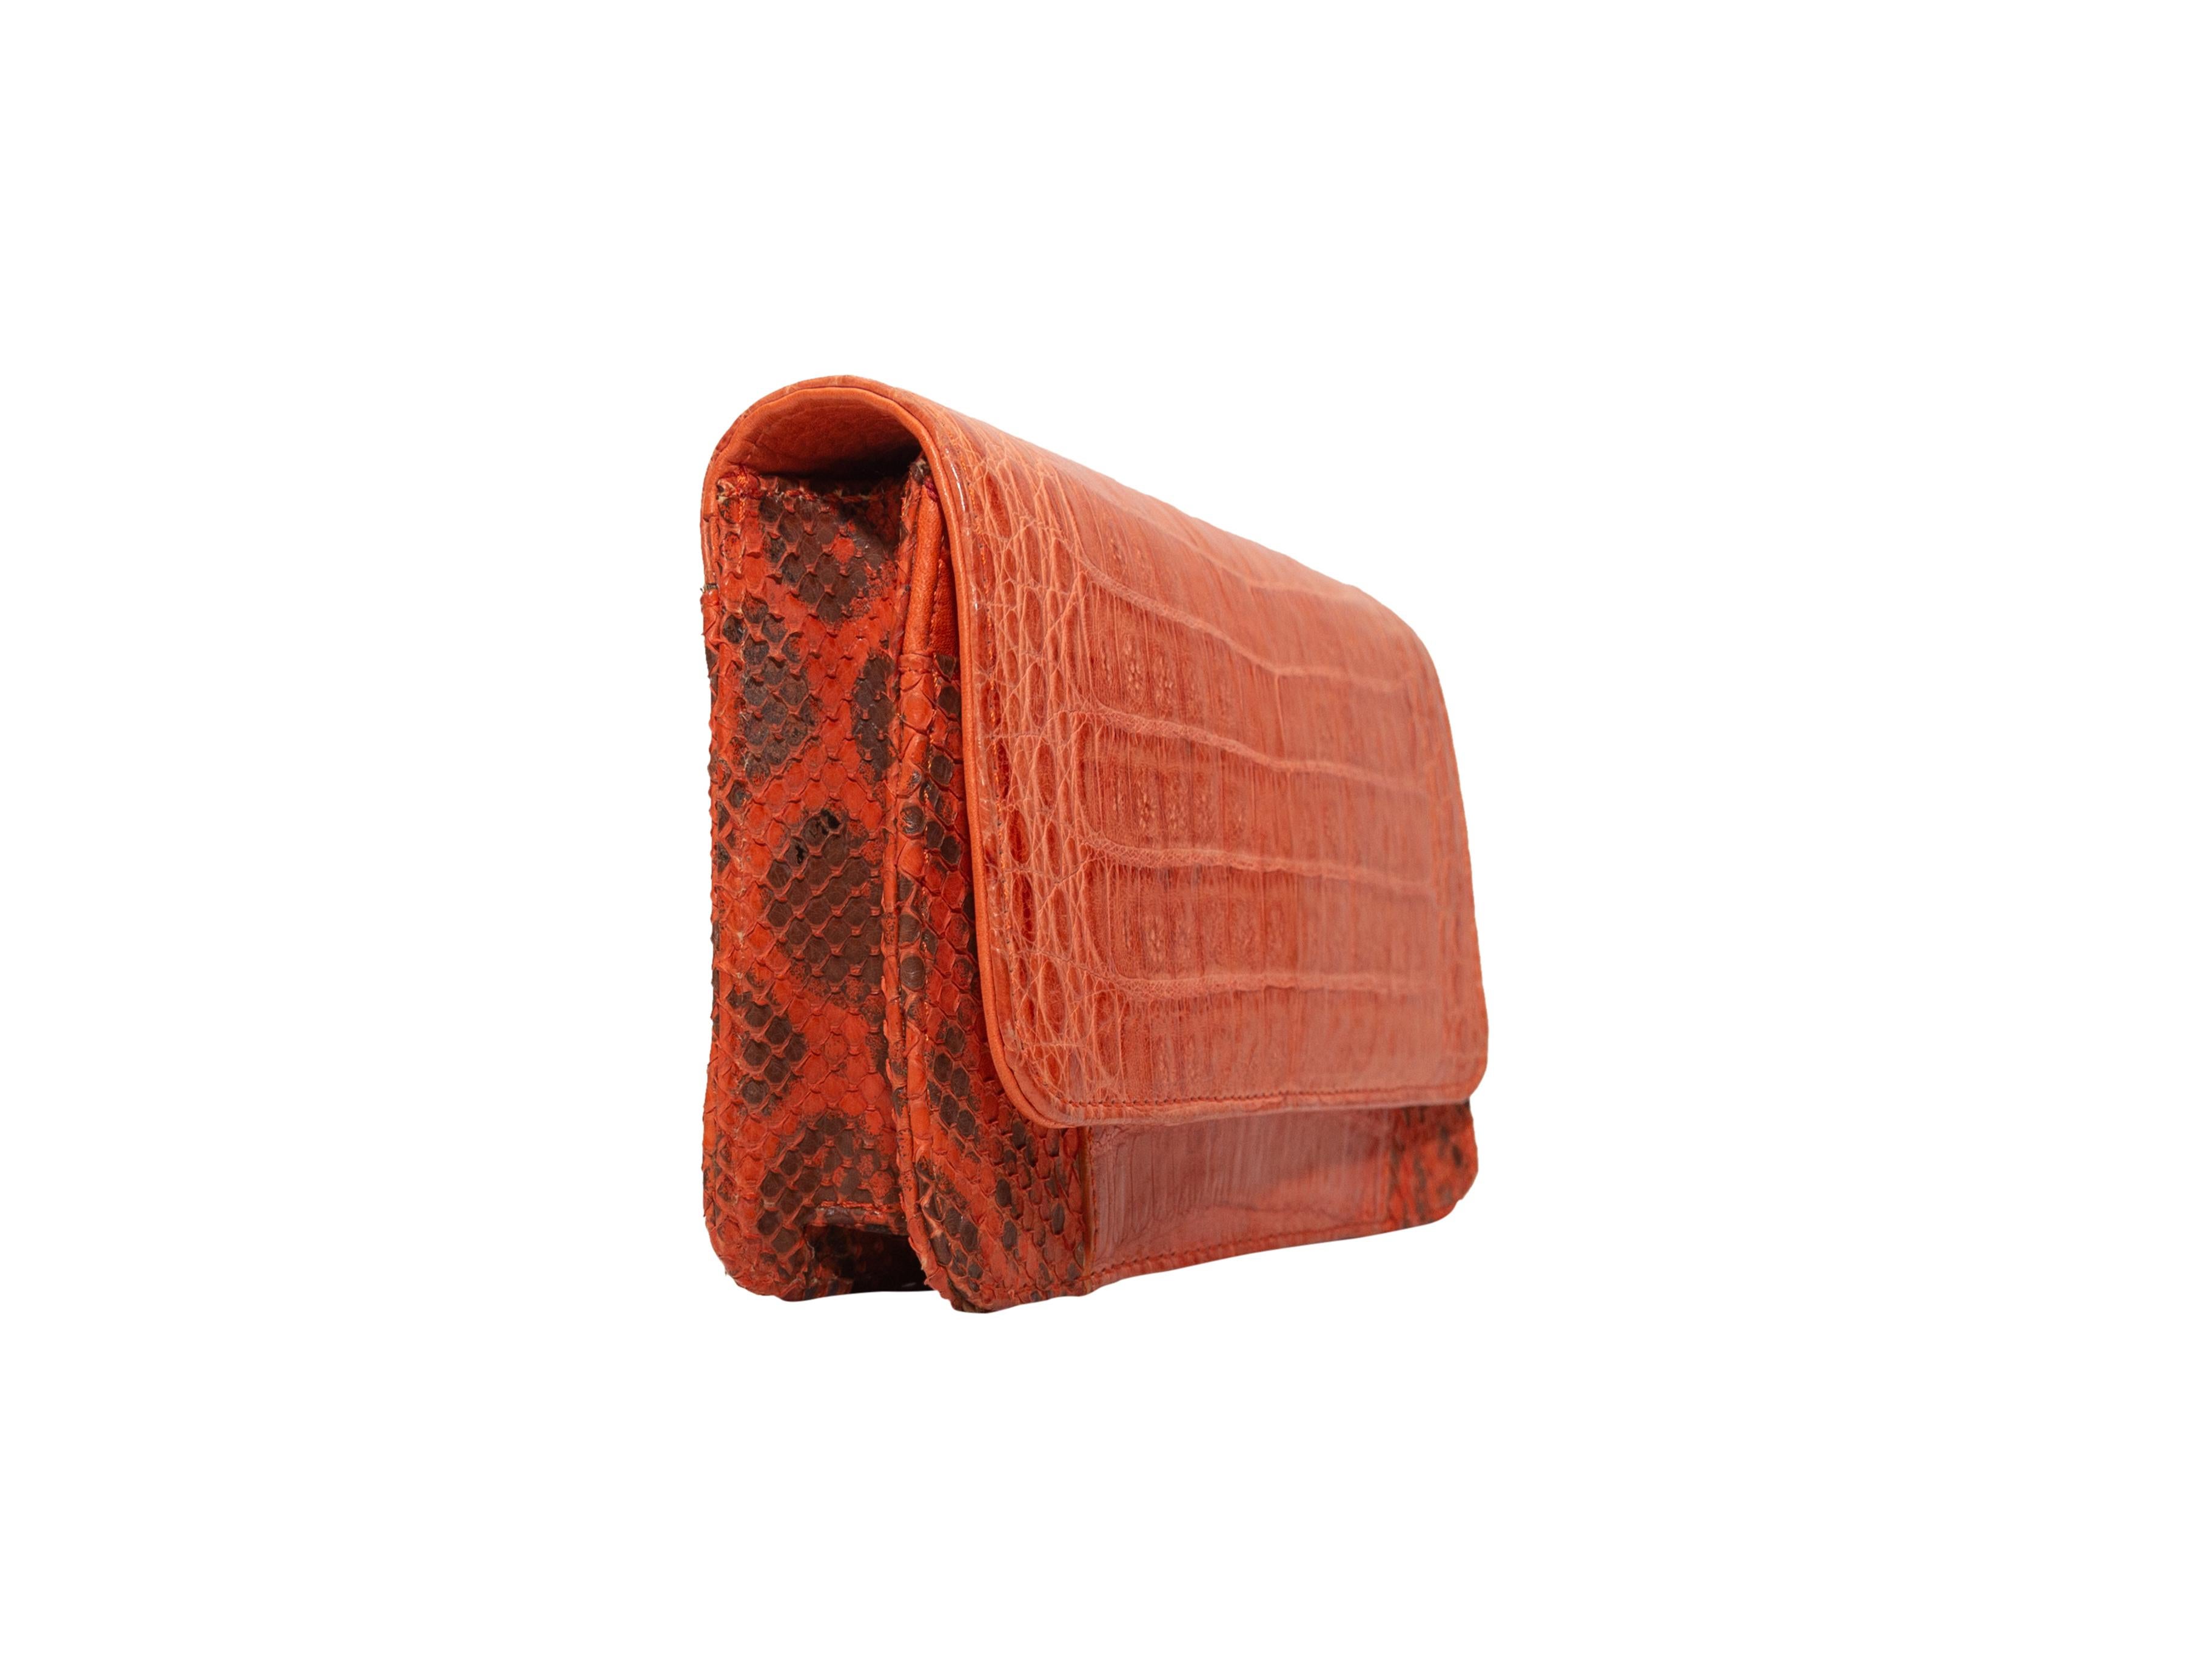 Product details: Orange alligator and snakeskin clutch by Carlos Falchi. Interior zip pocket. Optional gold-tone chain-link shoulder strap. 7.25